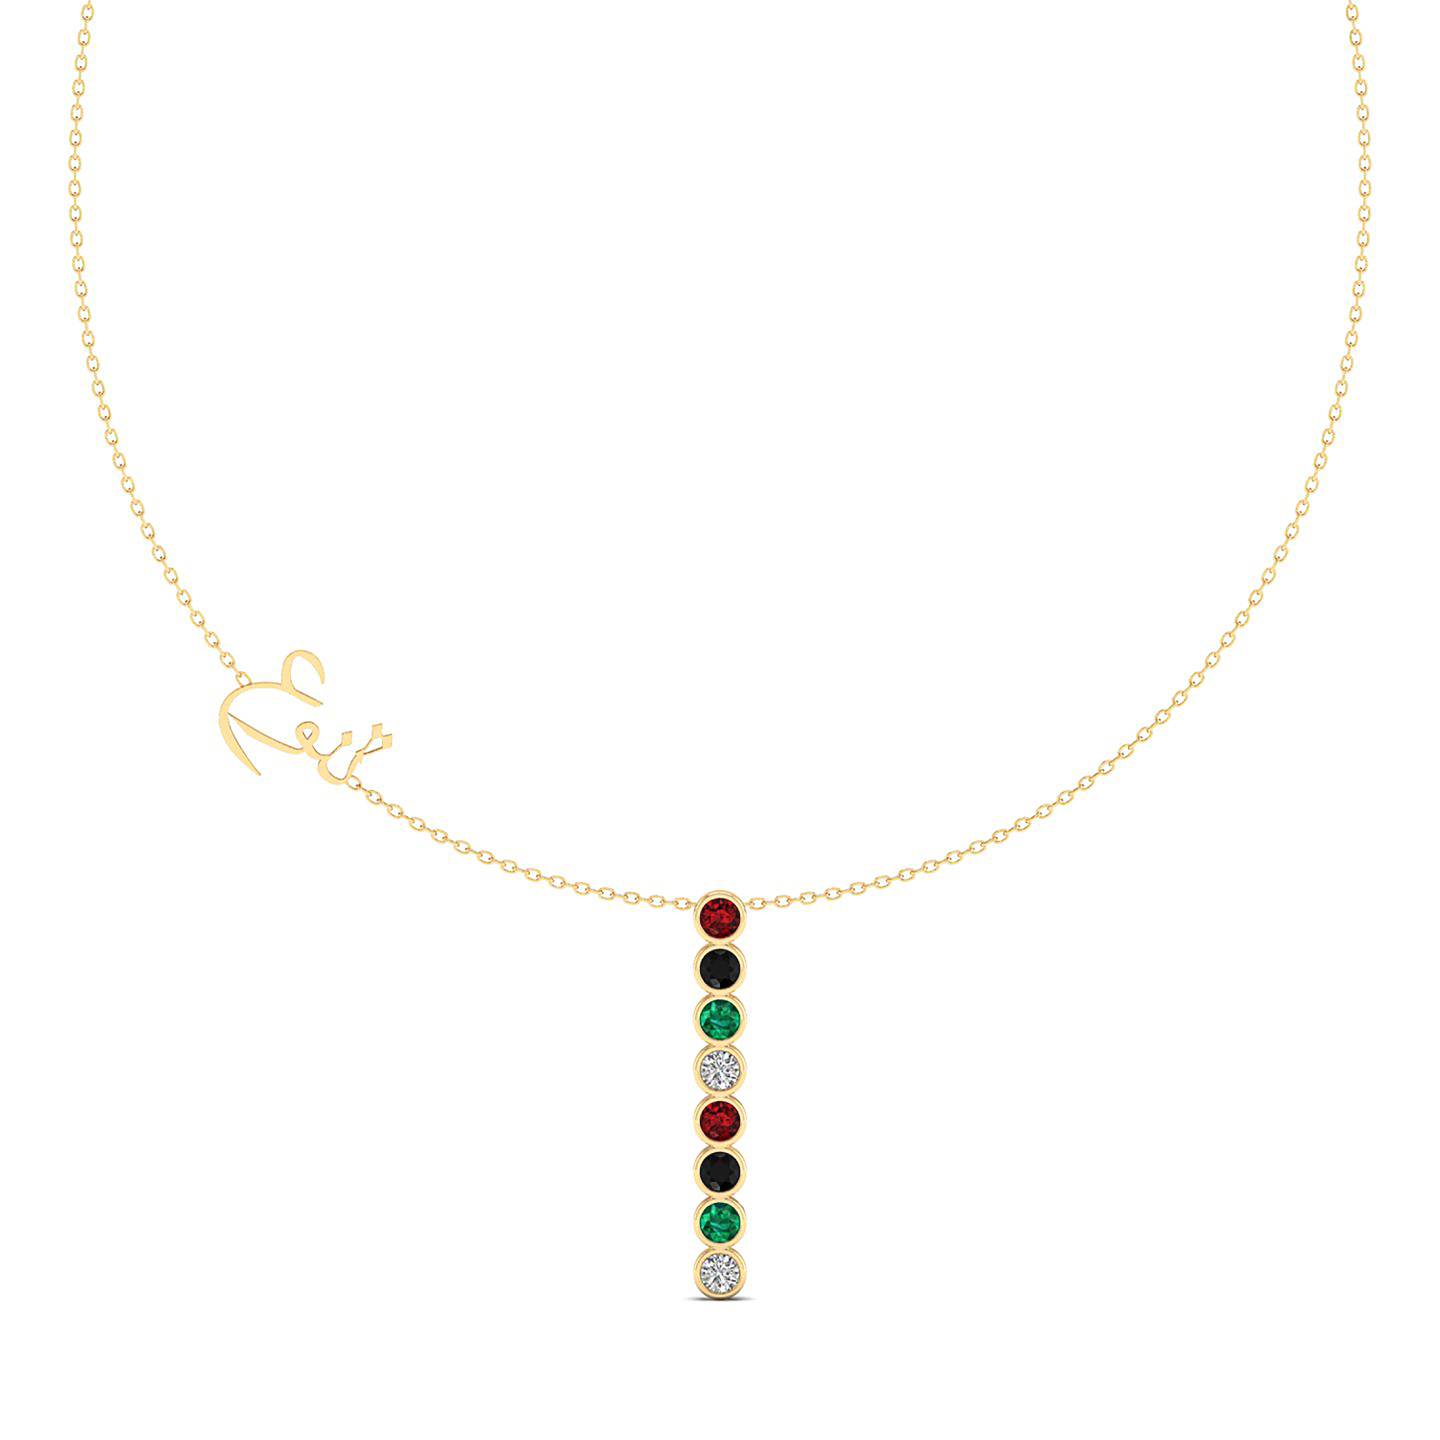 Etika Jewels's National Day necklace. Photo: Etika Jewels